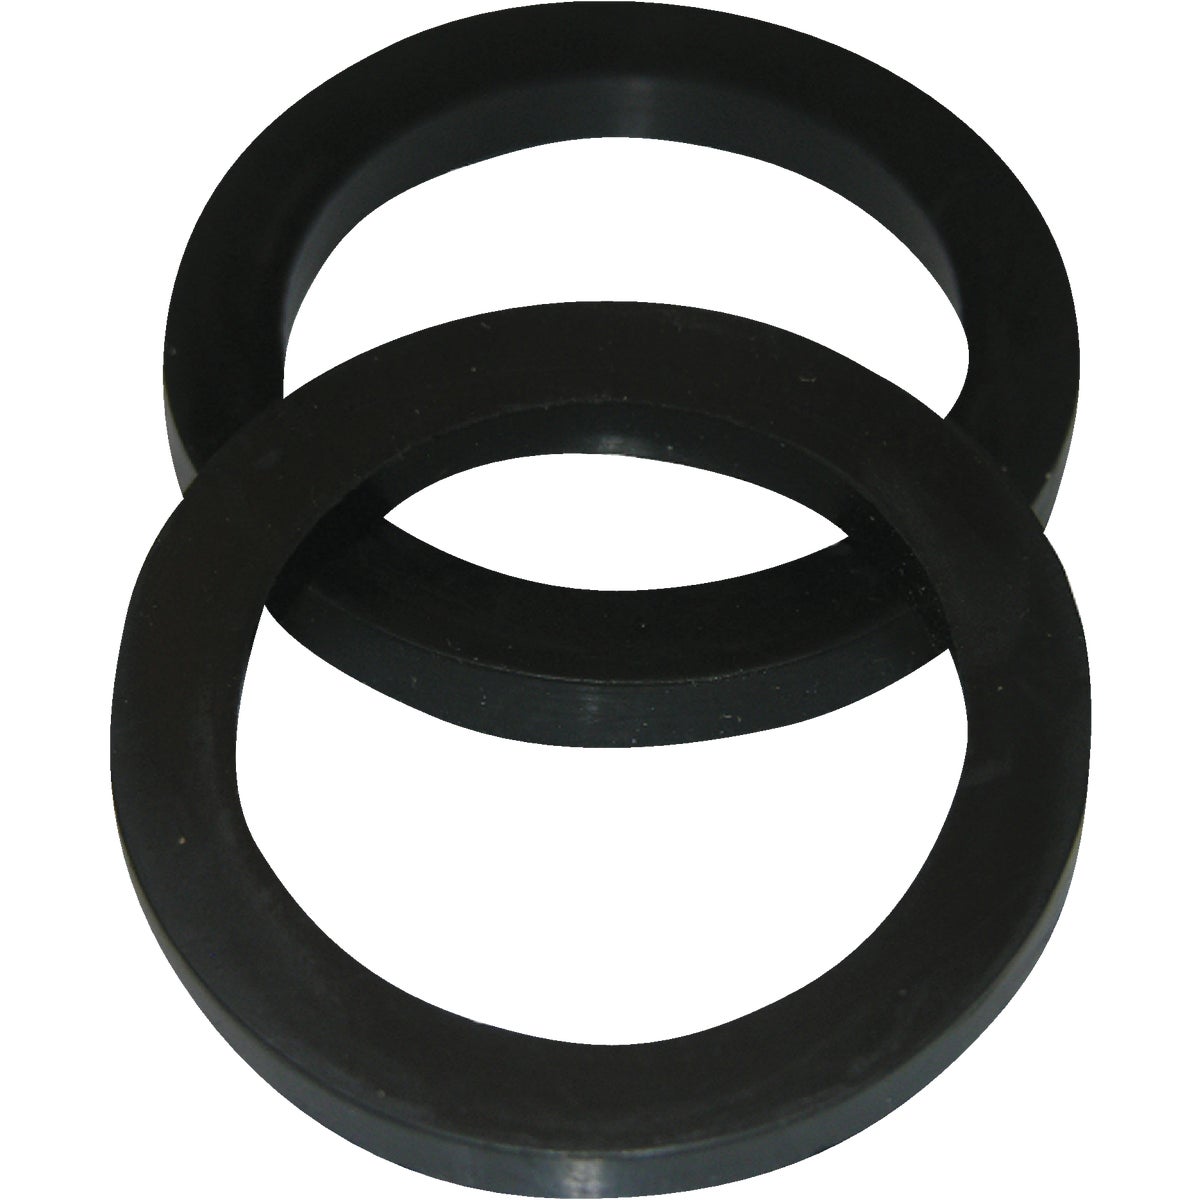 Lasco 1-1/2 In. x 1-1/4 In. Black Rubber Slip Joint Washer (2-Pack)